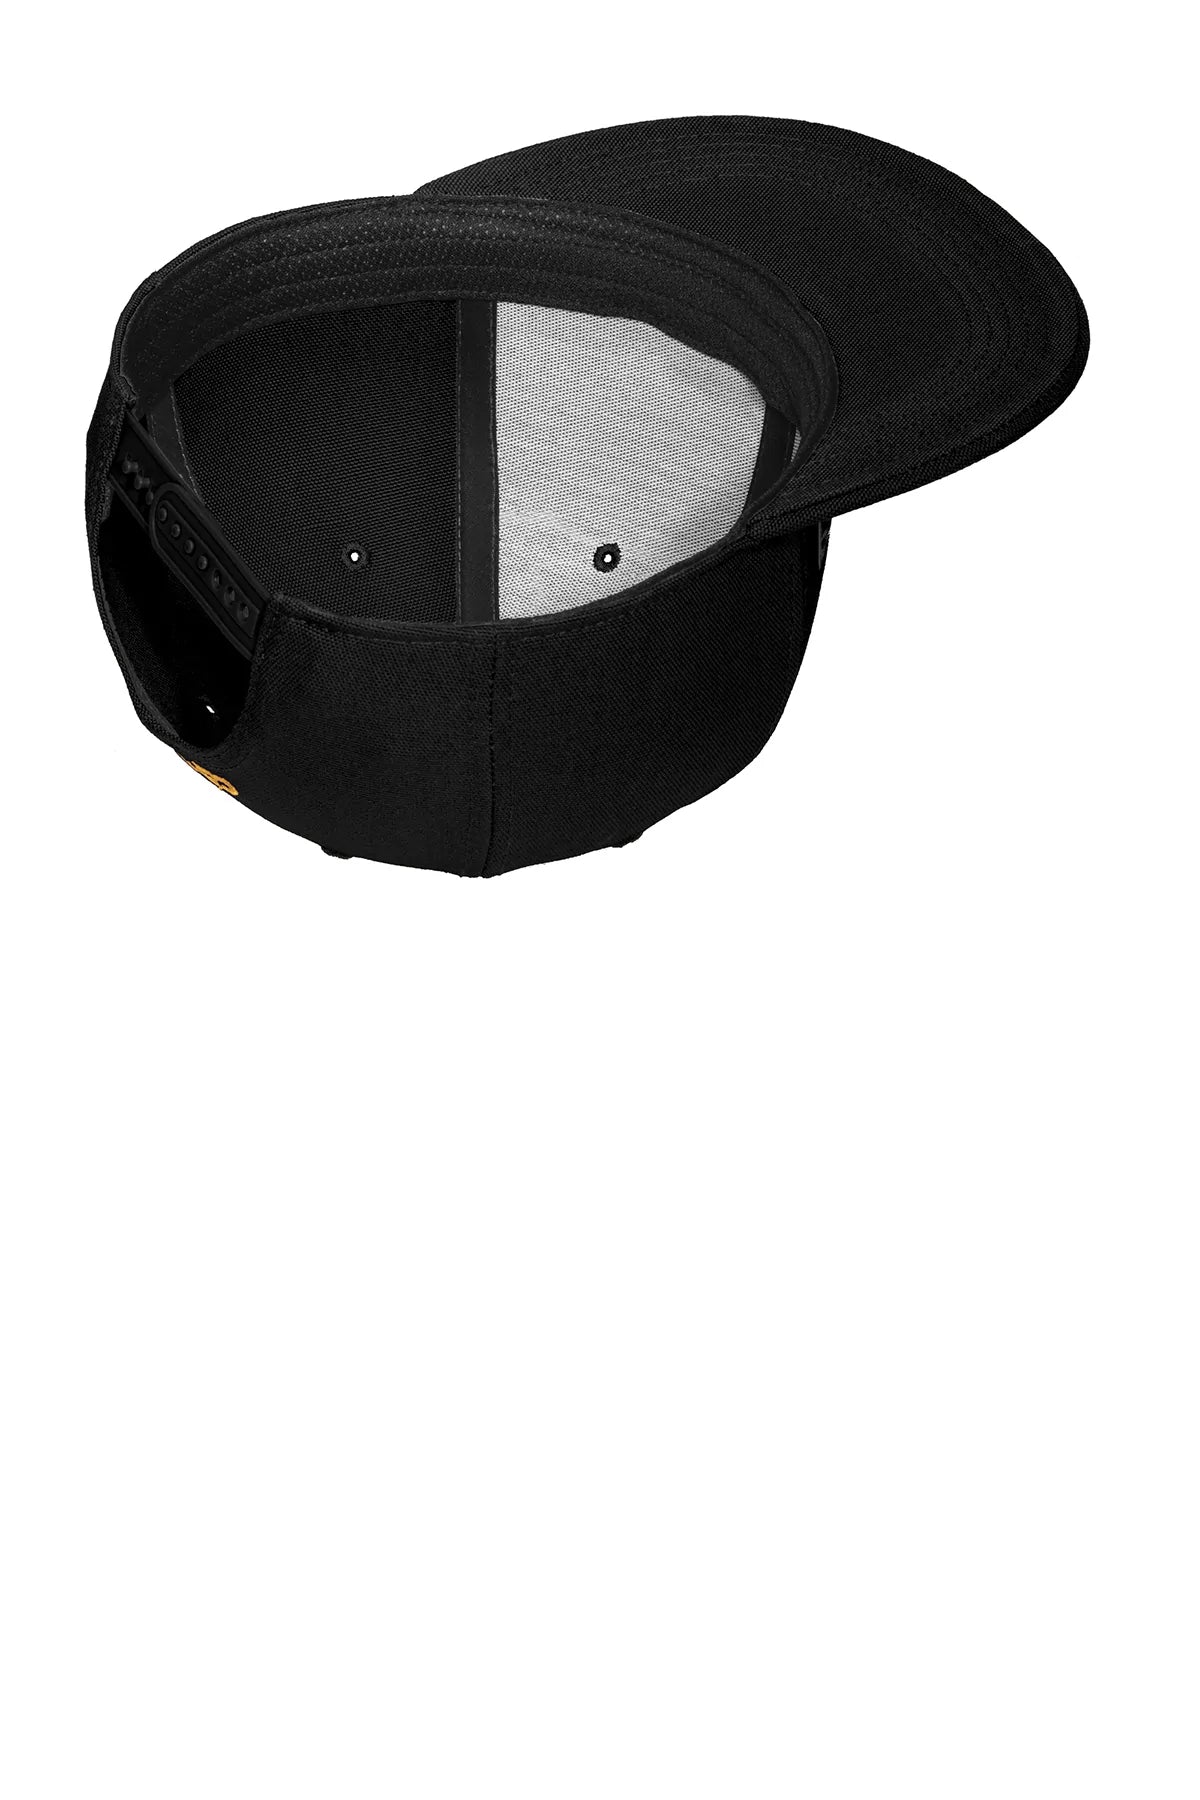 Carhartt Ashland Custom Caps, Black